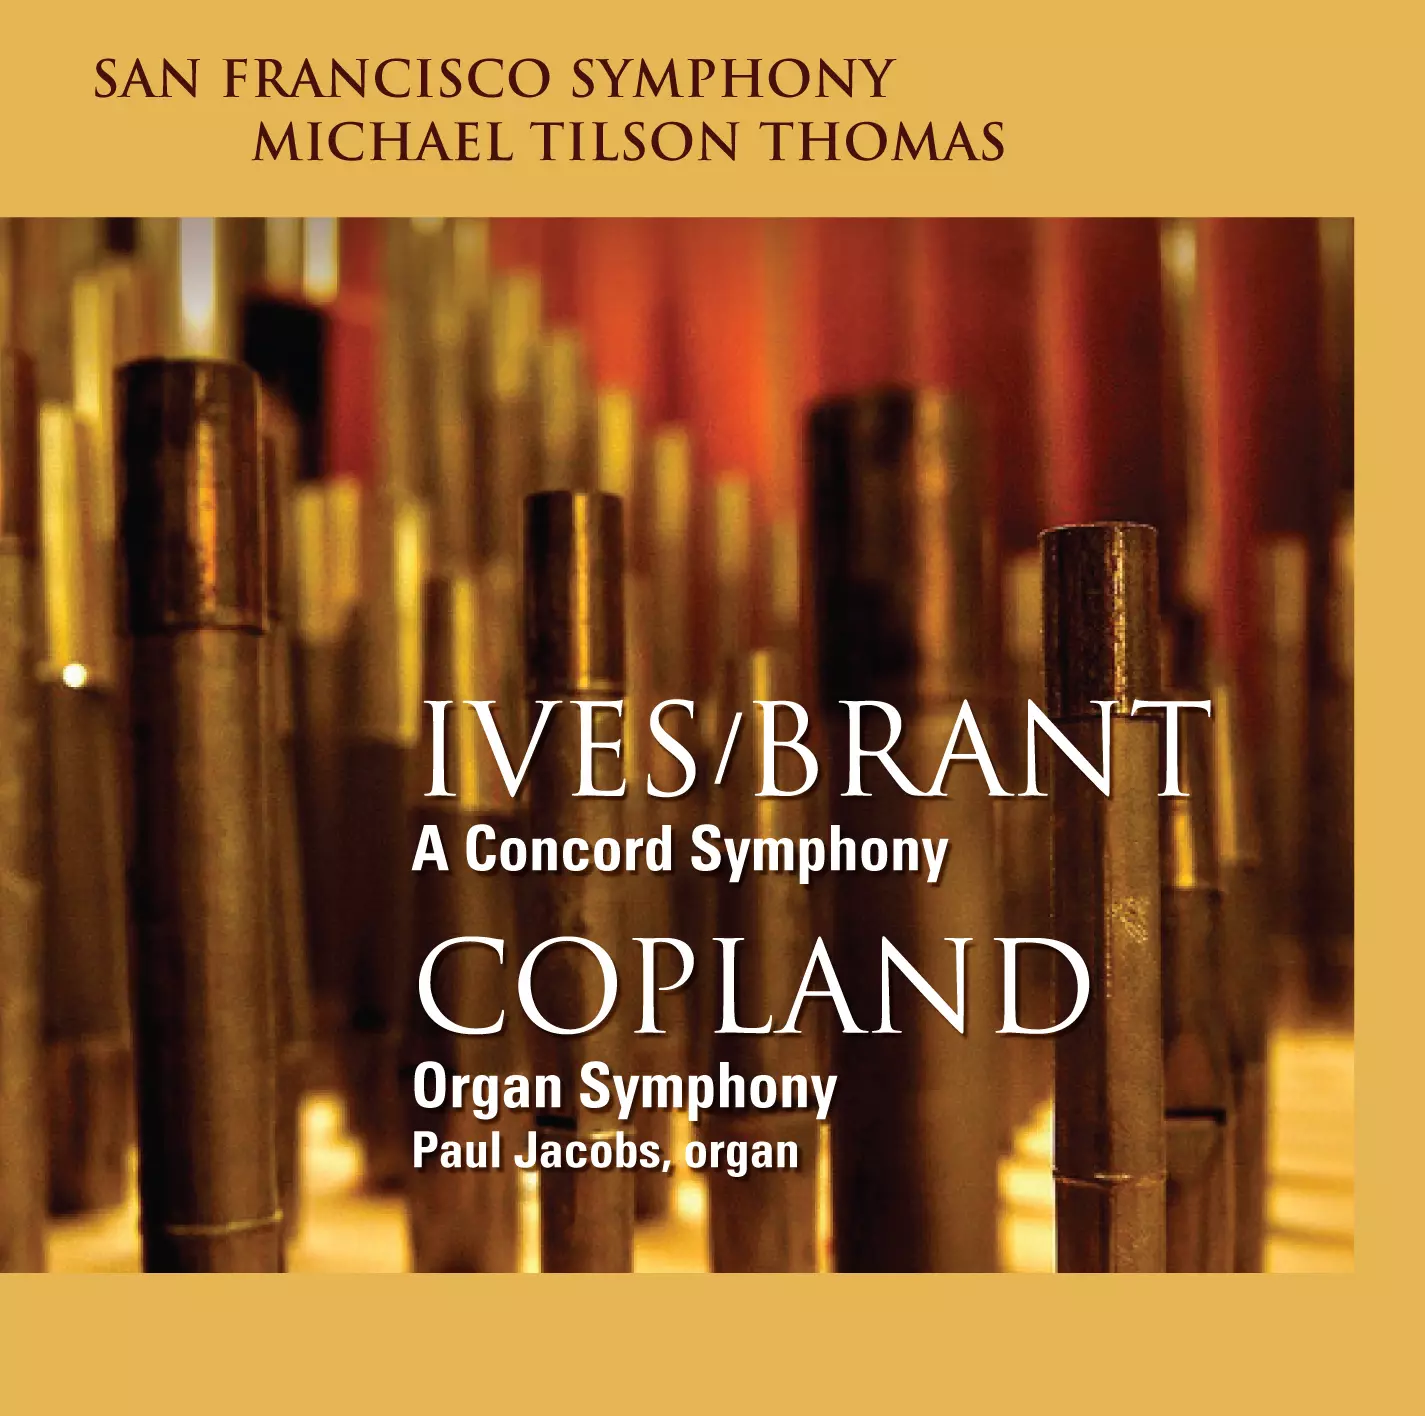 Ives/Brant: A Concord Symphony & Copland: Organ Symphony